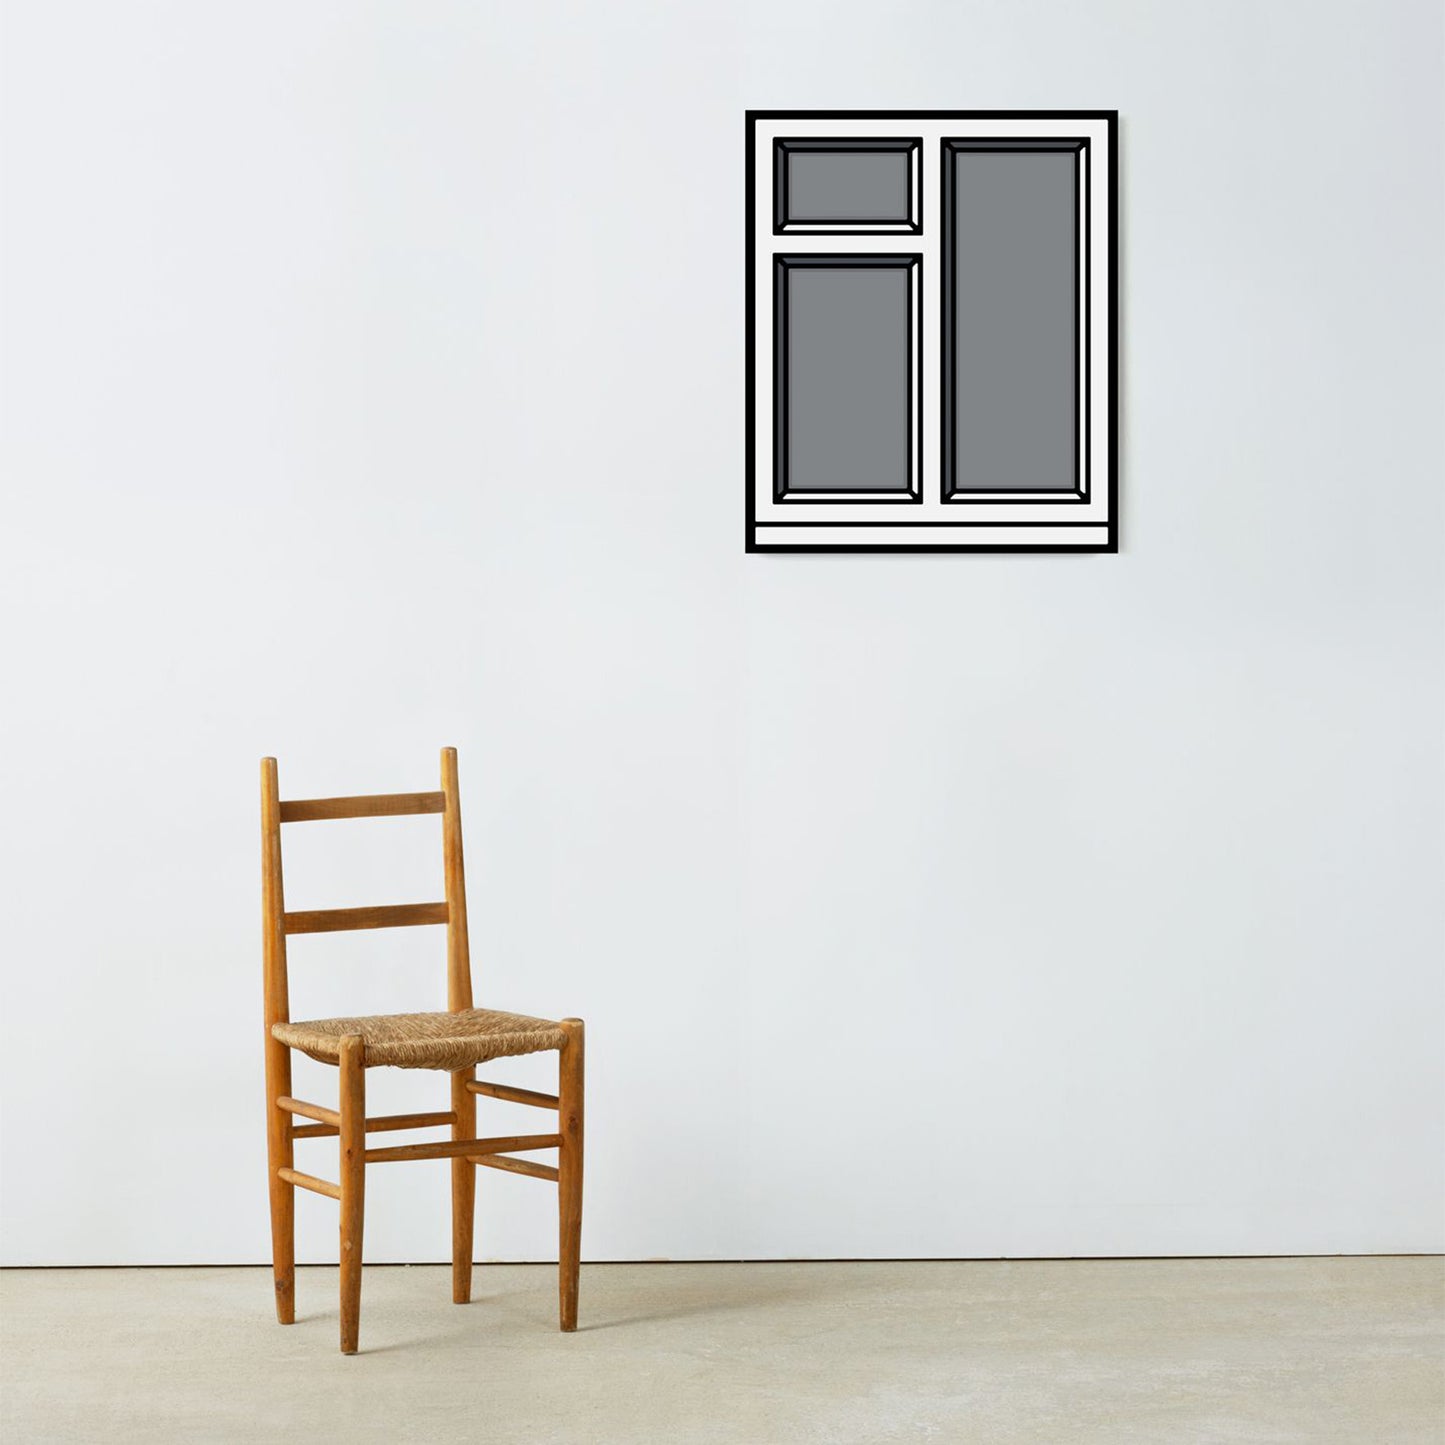 The Wrong Shop Window 4 – Richard Woods, 60x72cm